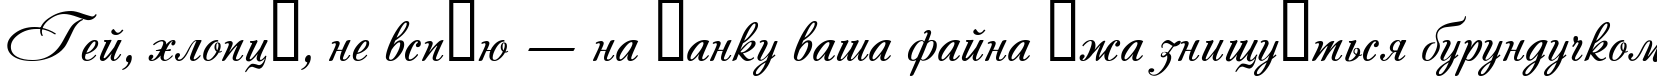 Пример написания шрифтом Andantino script текста на украинском